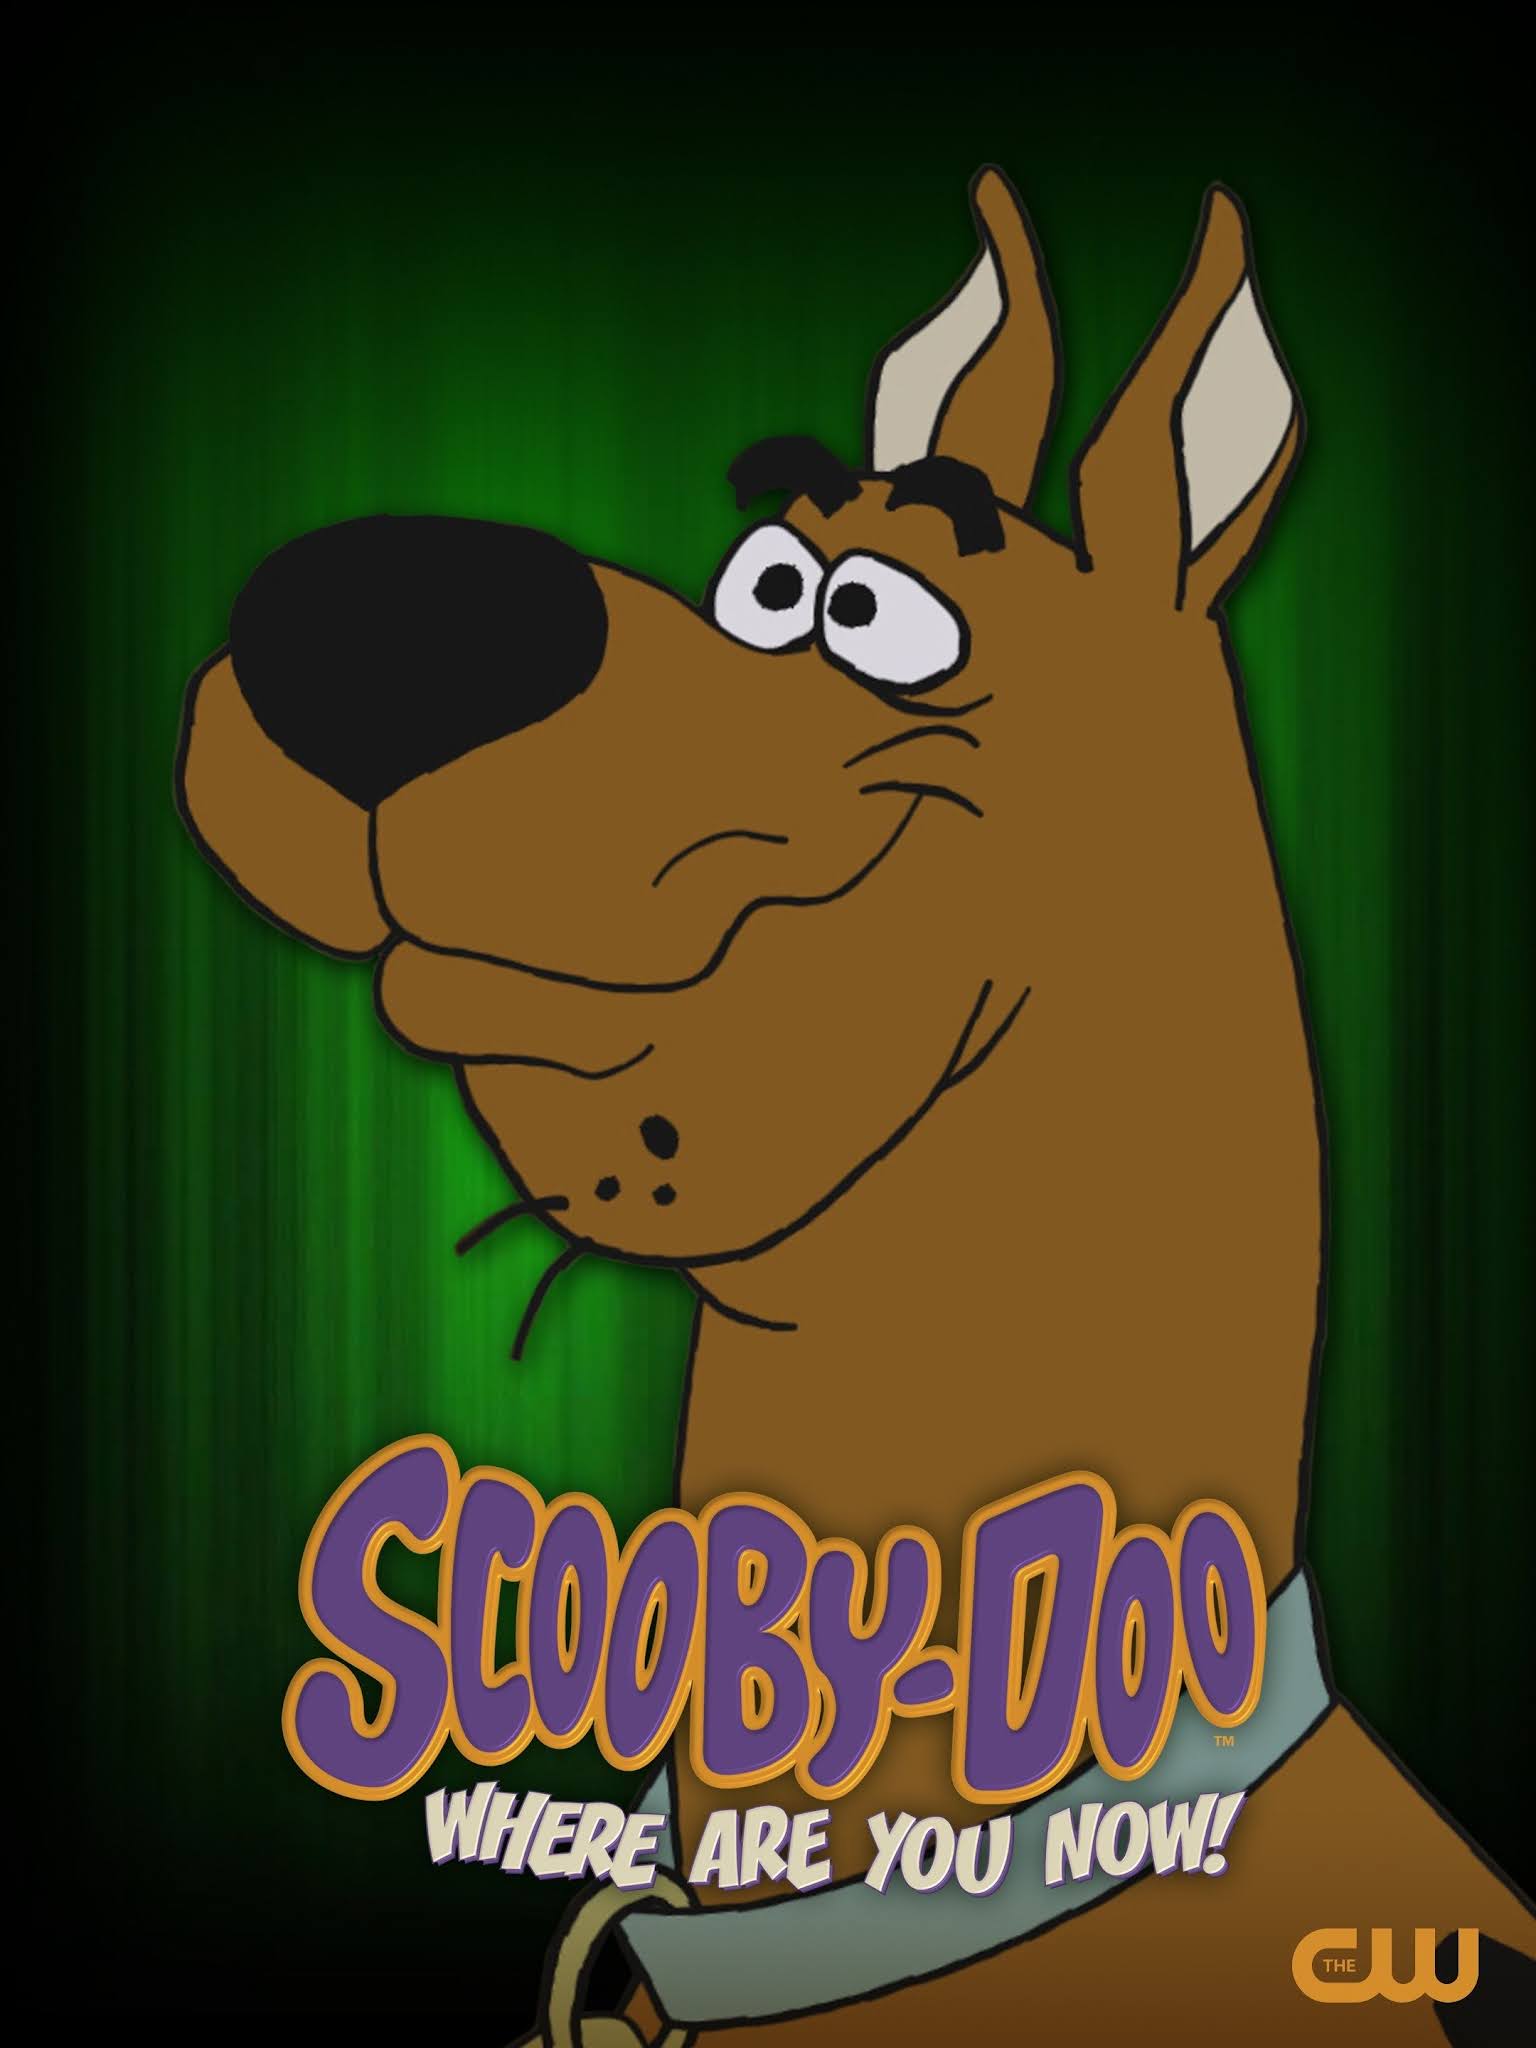 Scooby-Doo Neuware 109 new where are you? Nr 2021